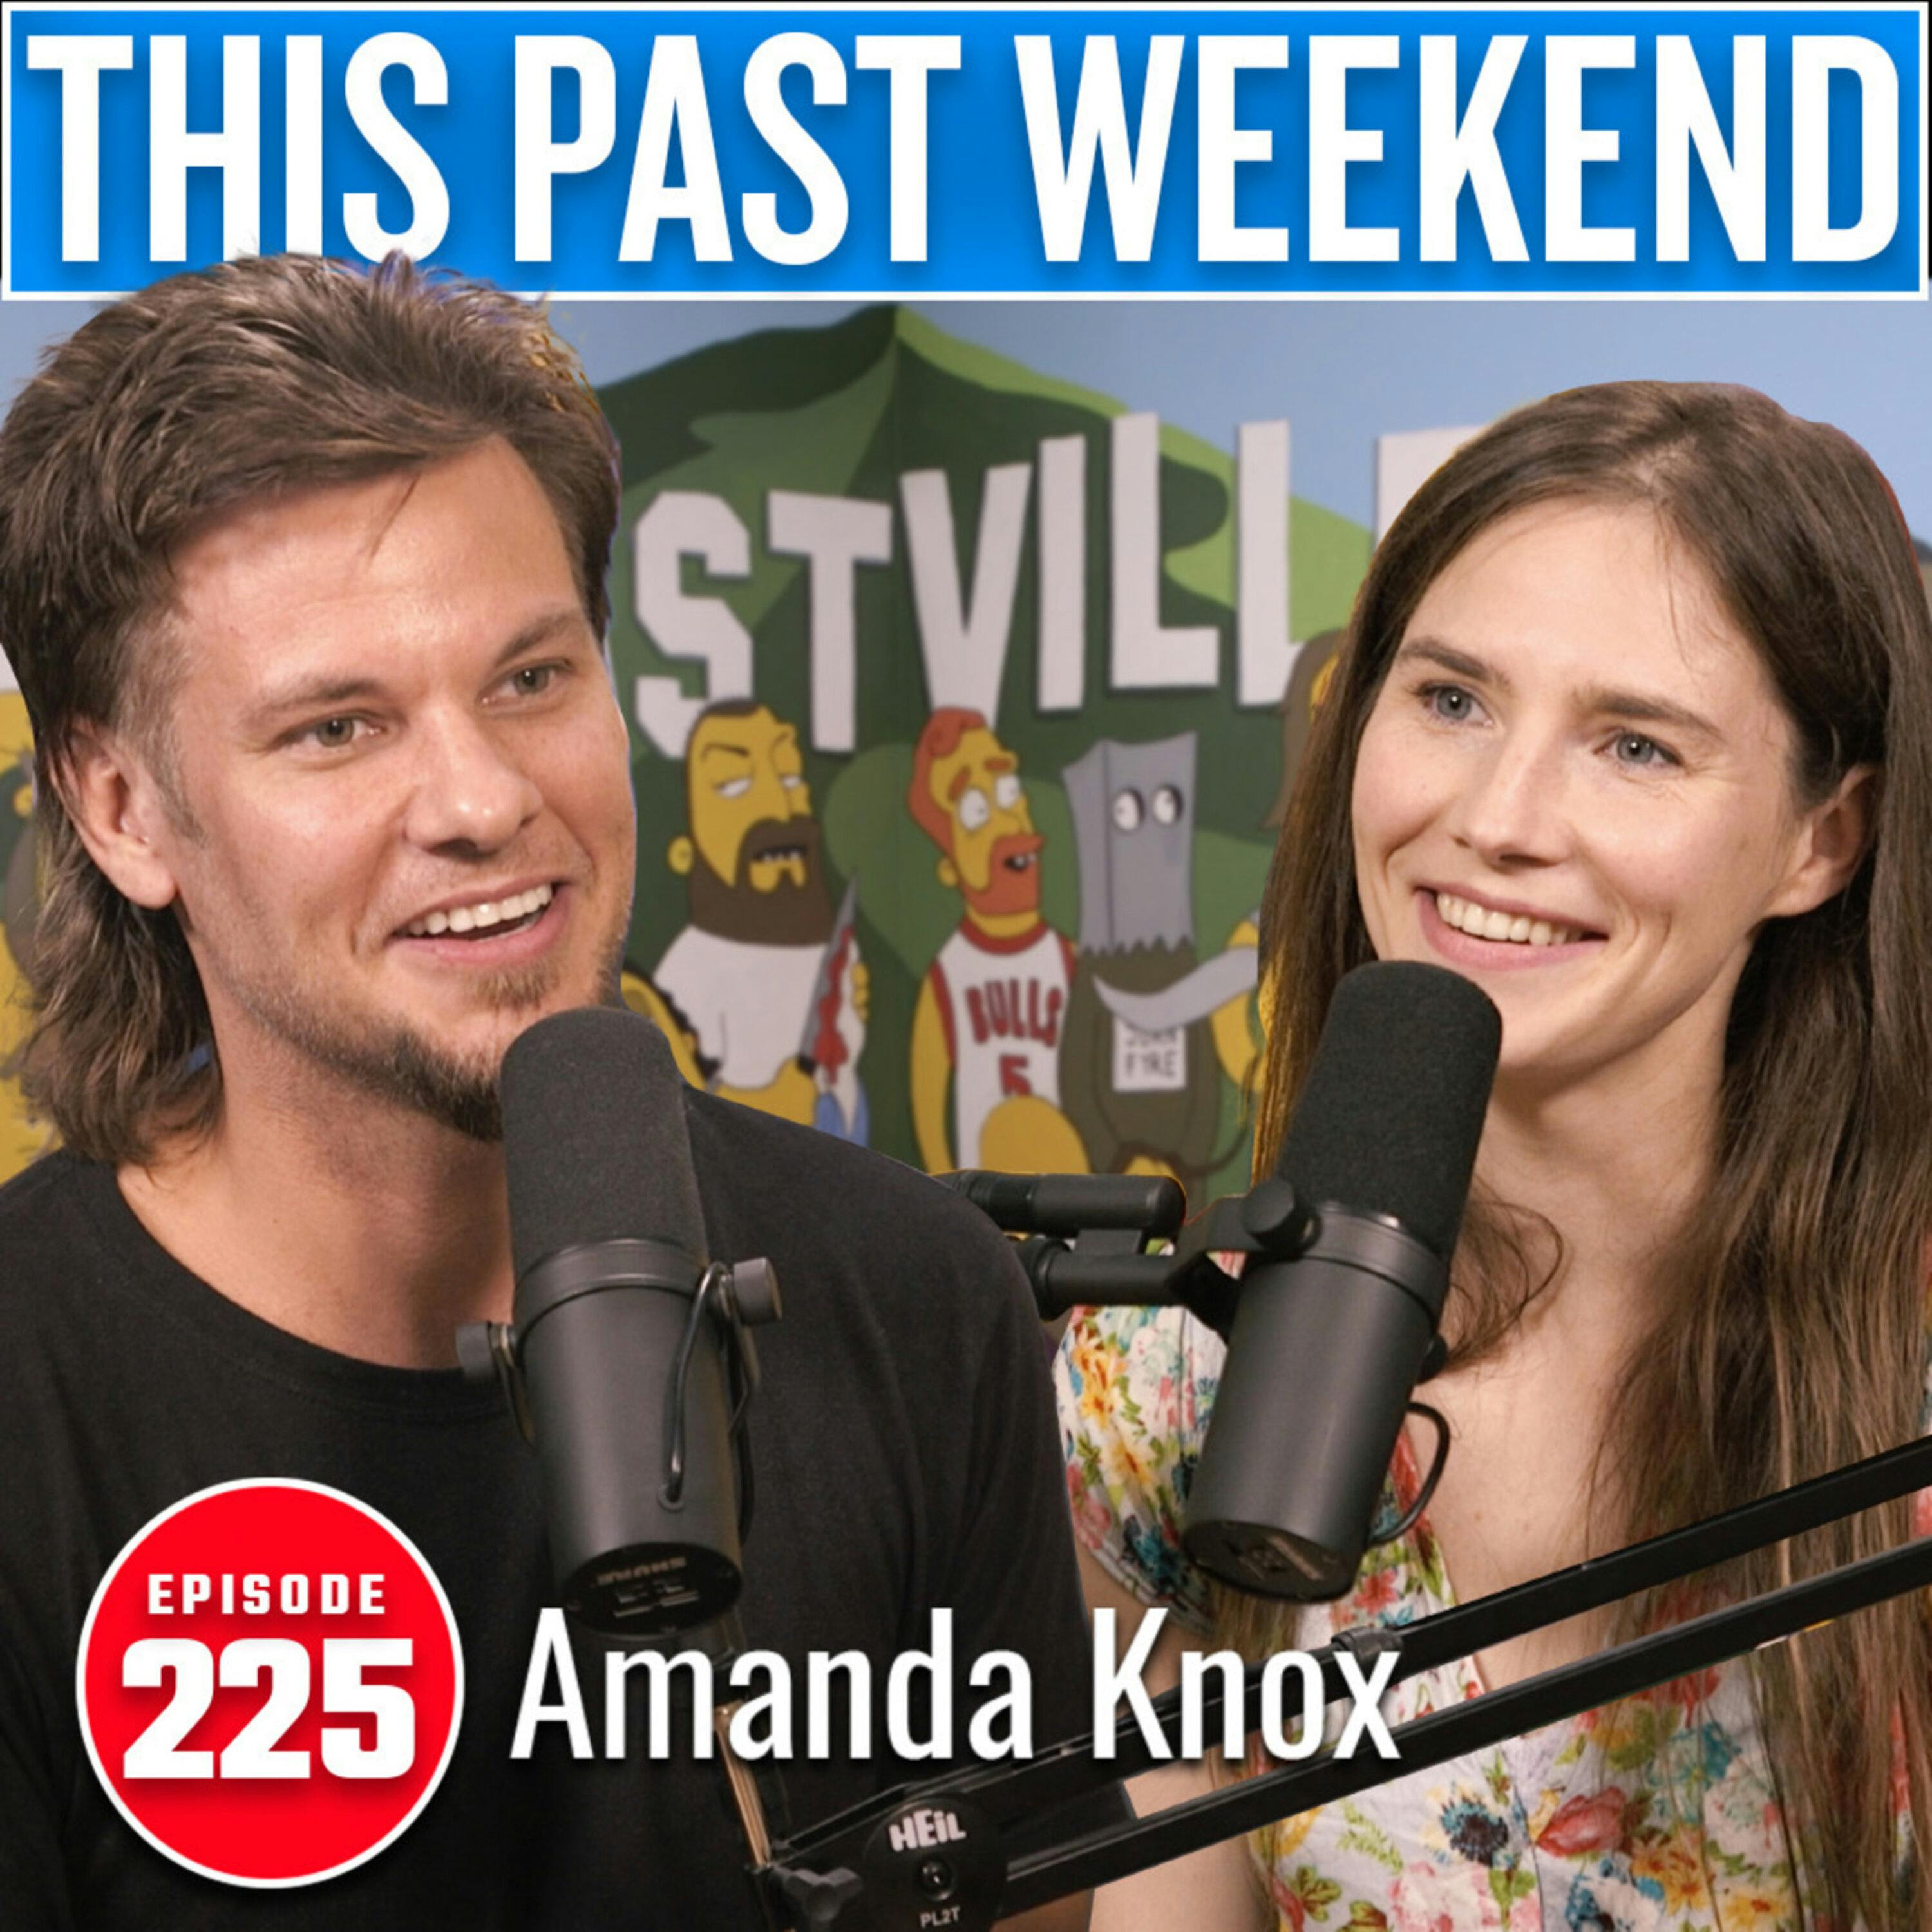 Amanda Knox | This Past Weekend #225 by Theo Von